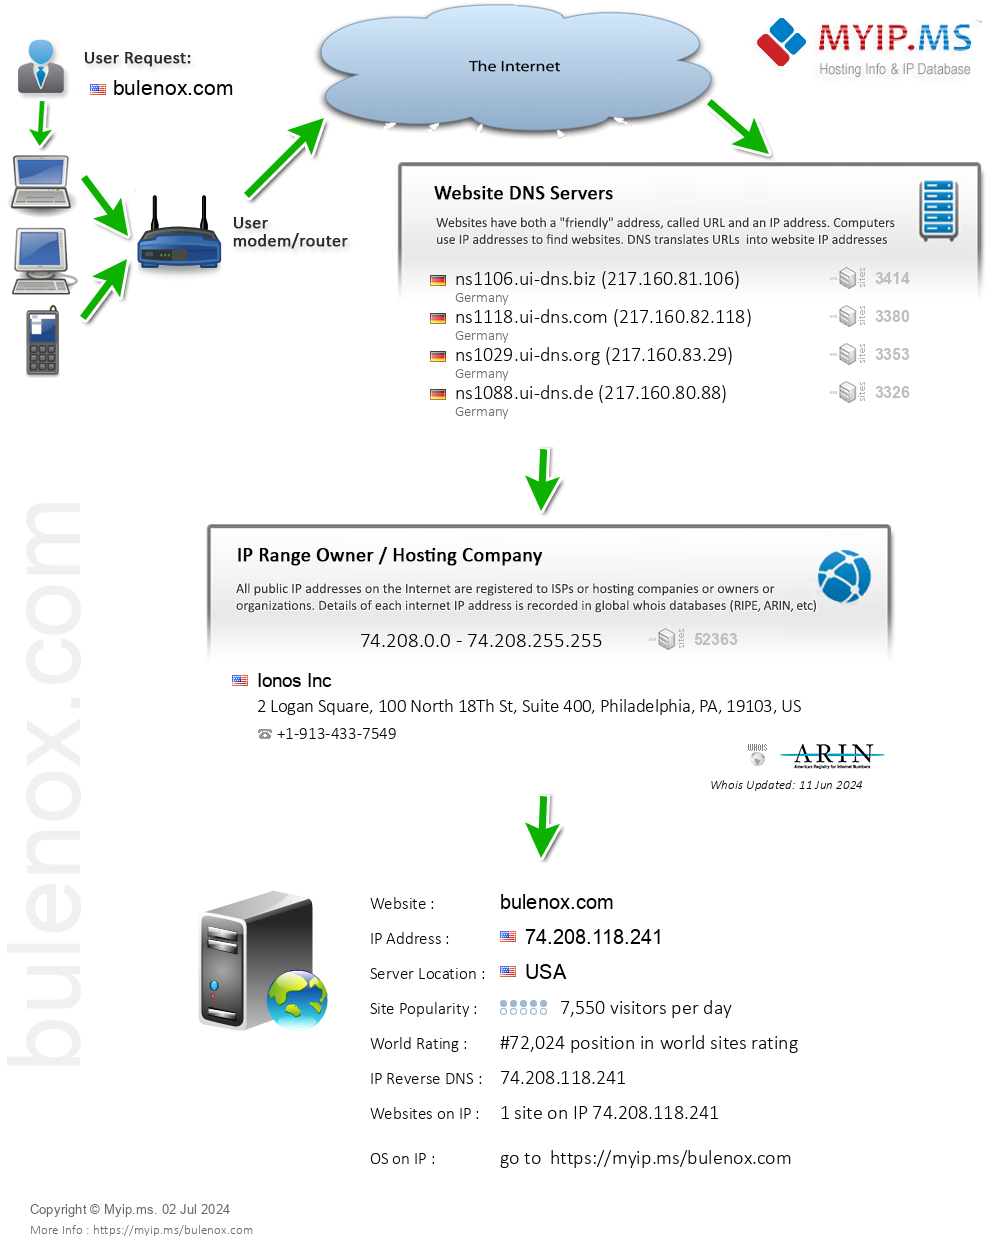 Bulenox.com - Website Hosting Visual IP Diagram